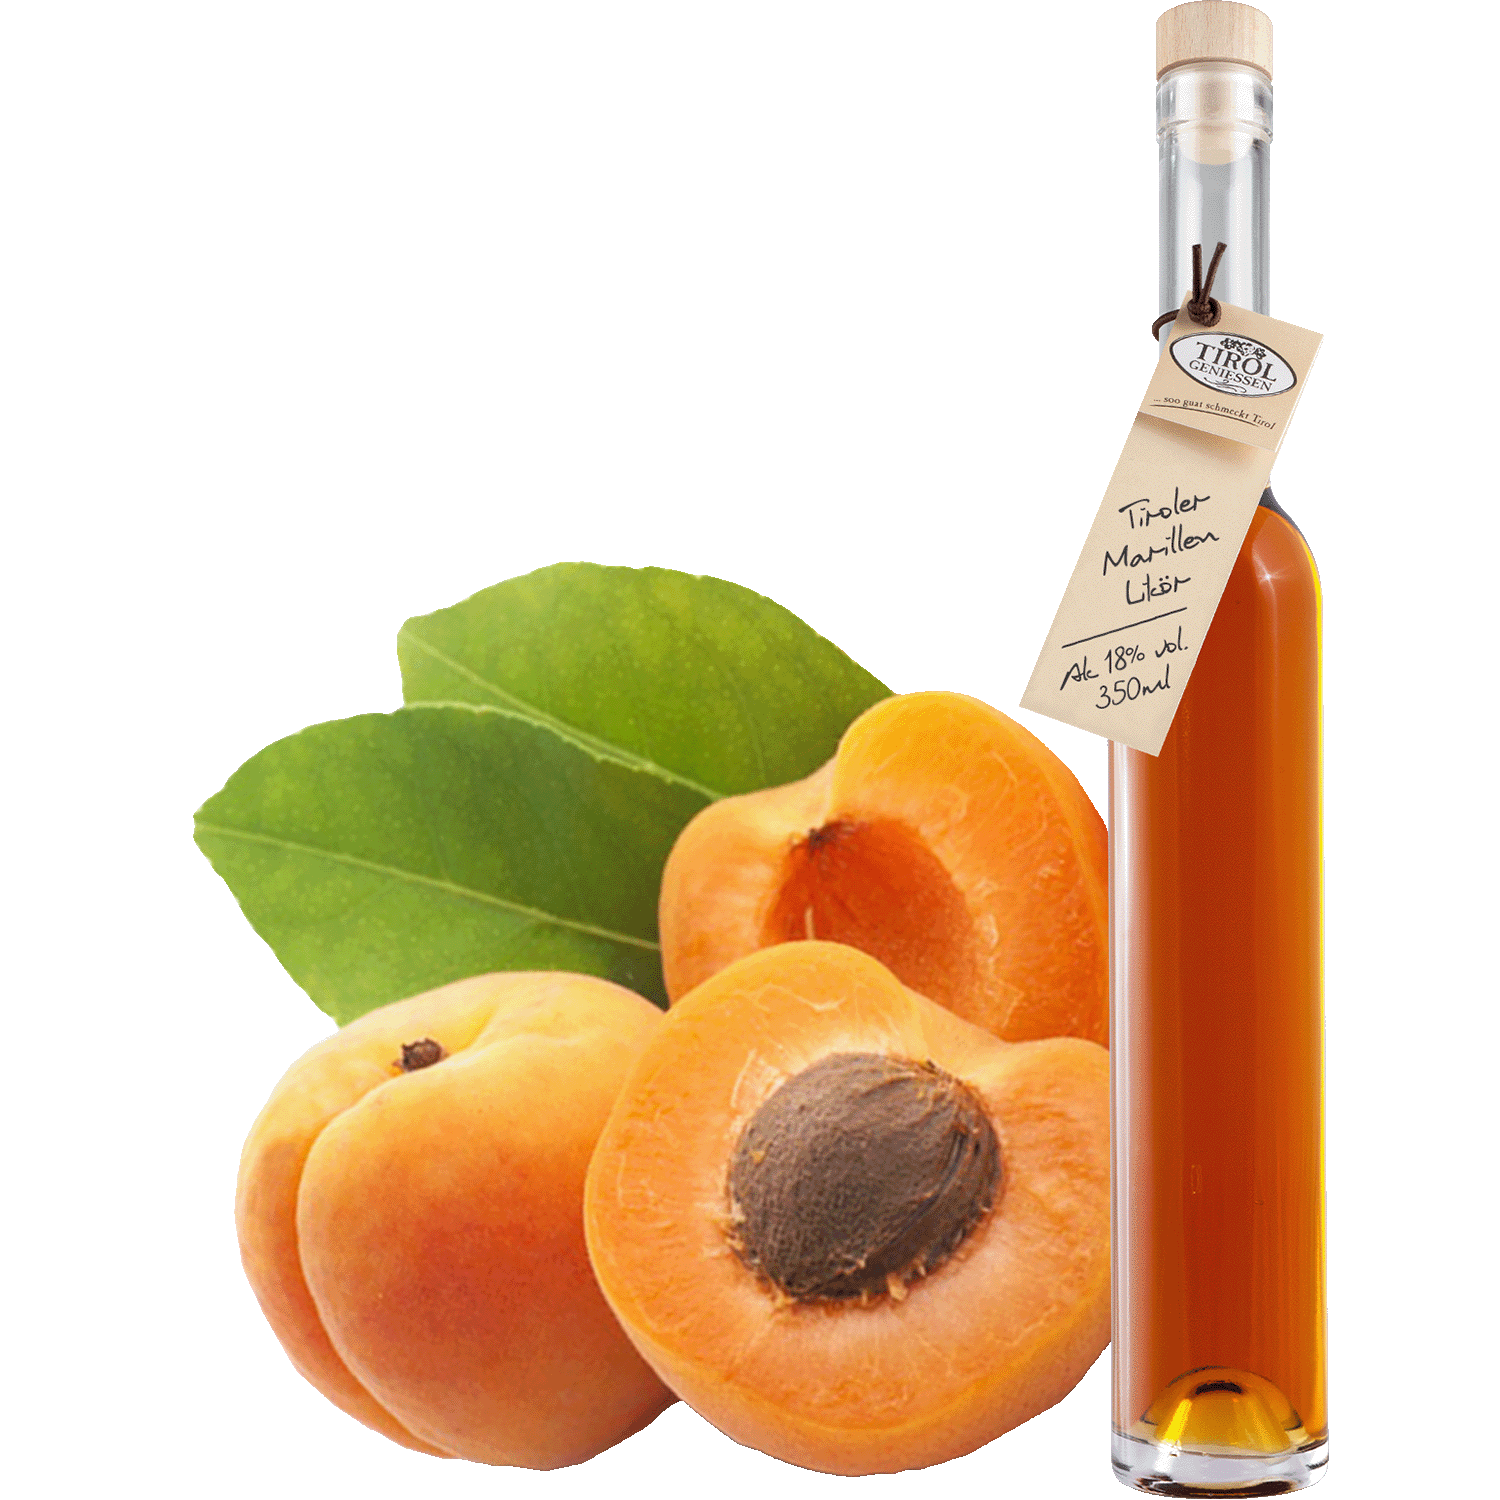 Apricot Liqueur in gift bottle from Austria from Tirol Geniessen